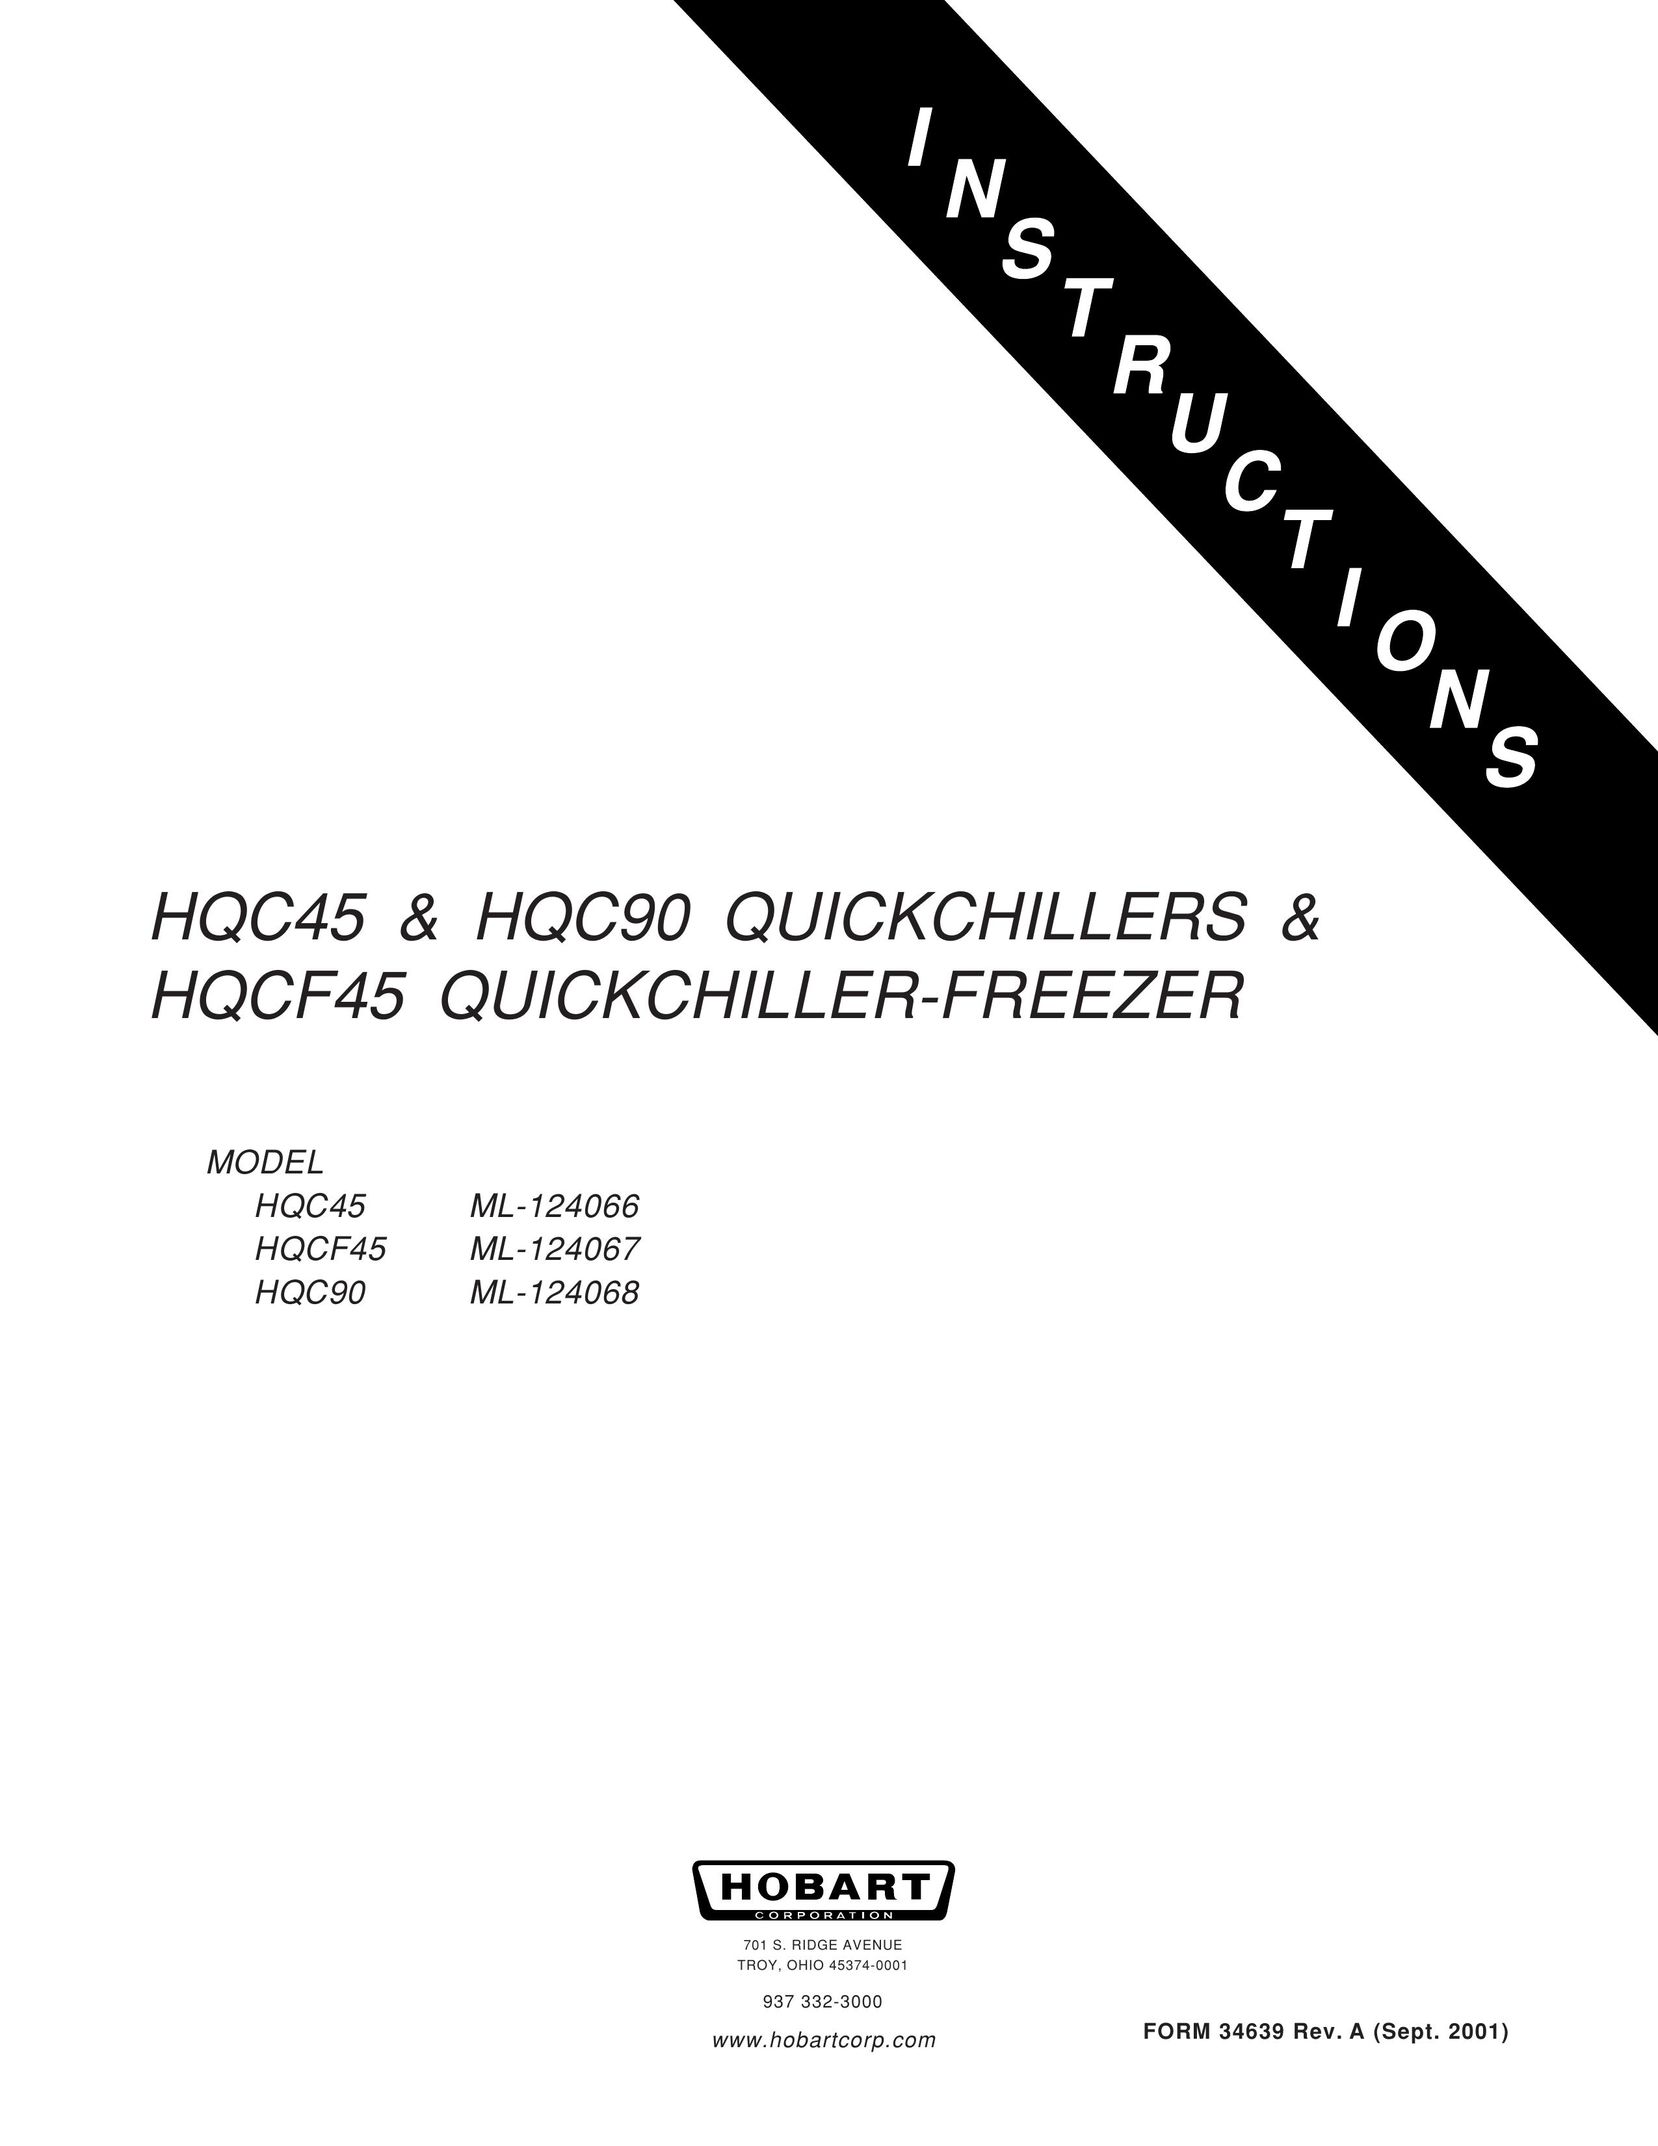 Hobart ML-124068 Freezer User Manual